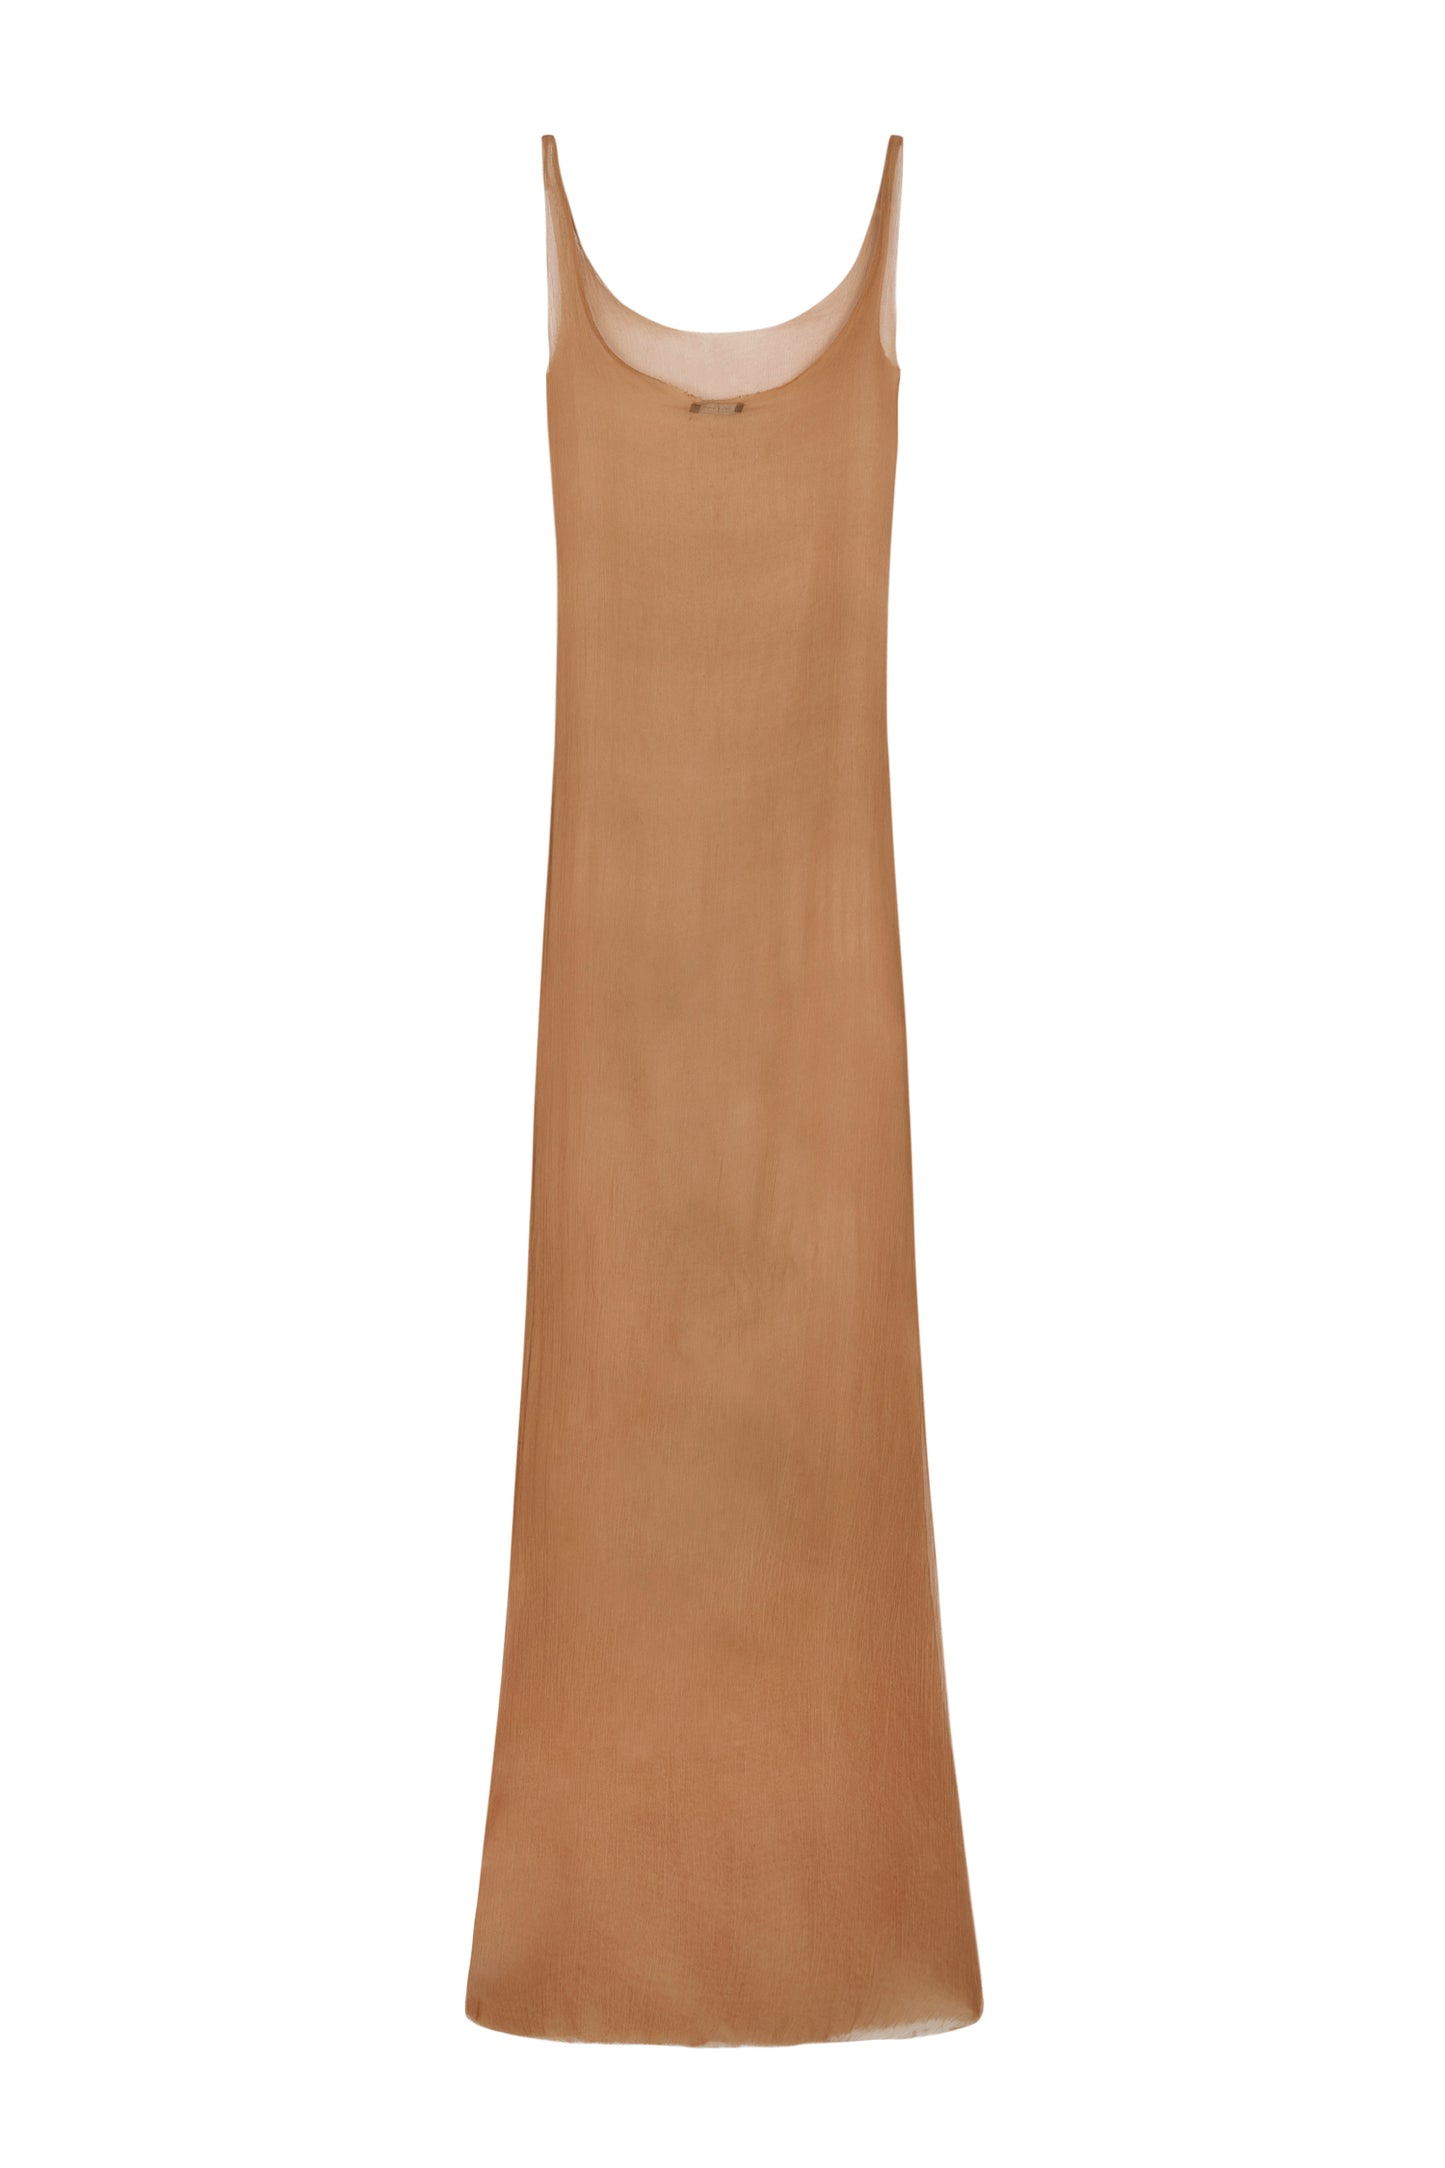 Aura, bronze silk bambula camisole dress